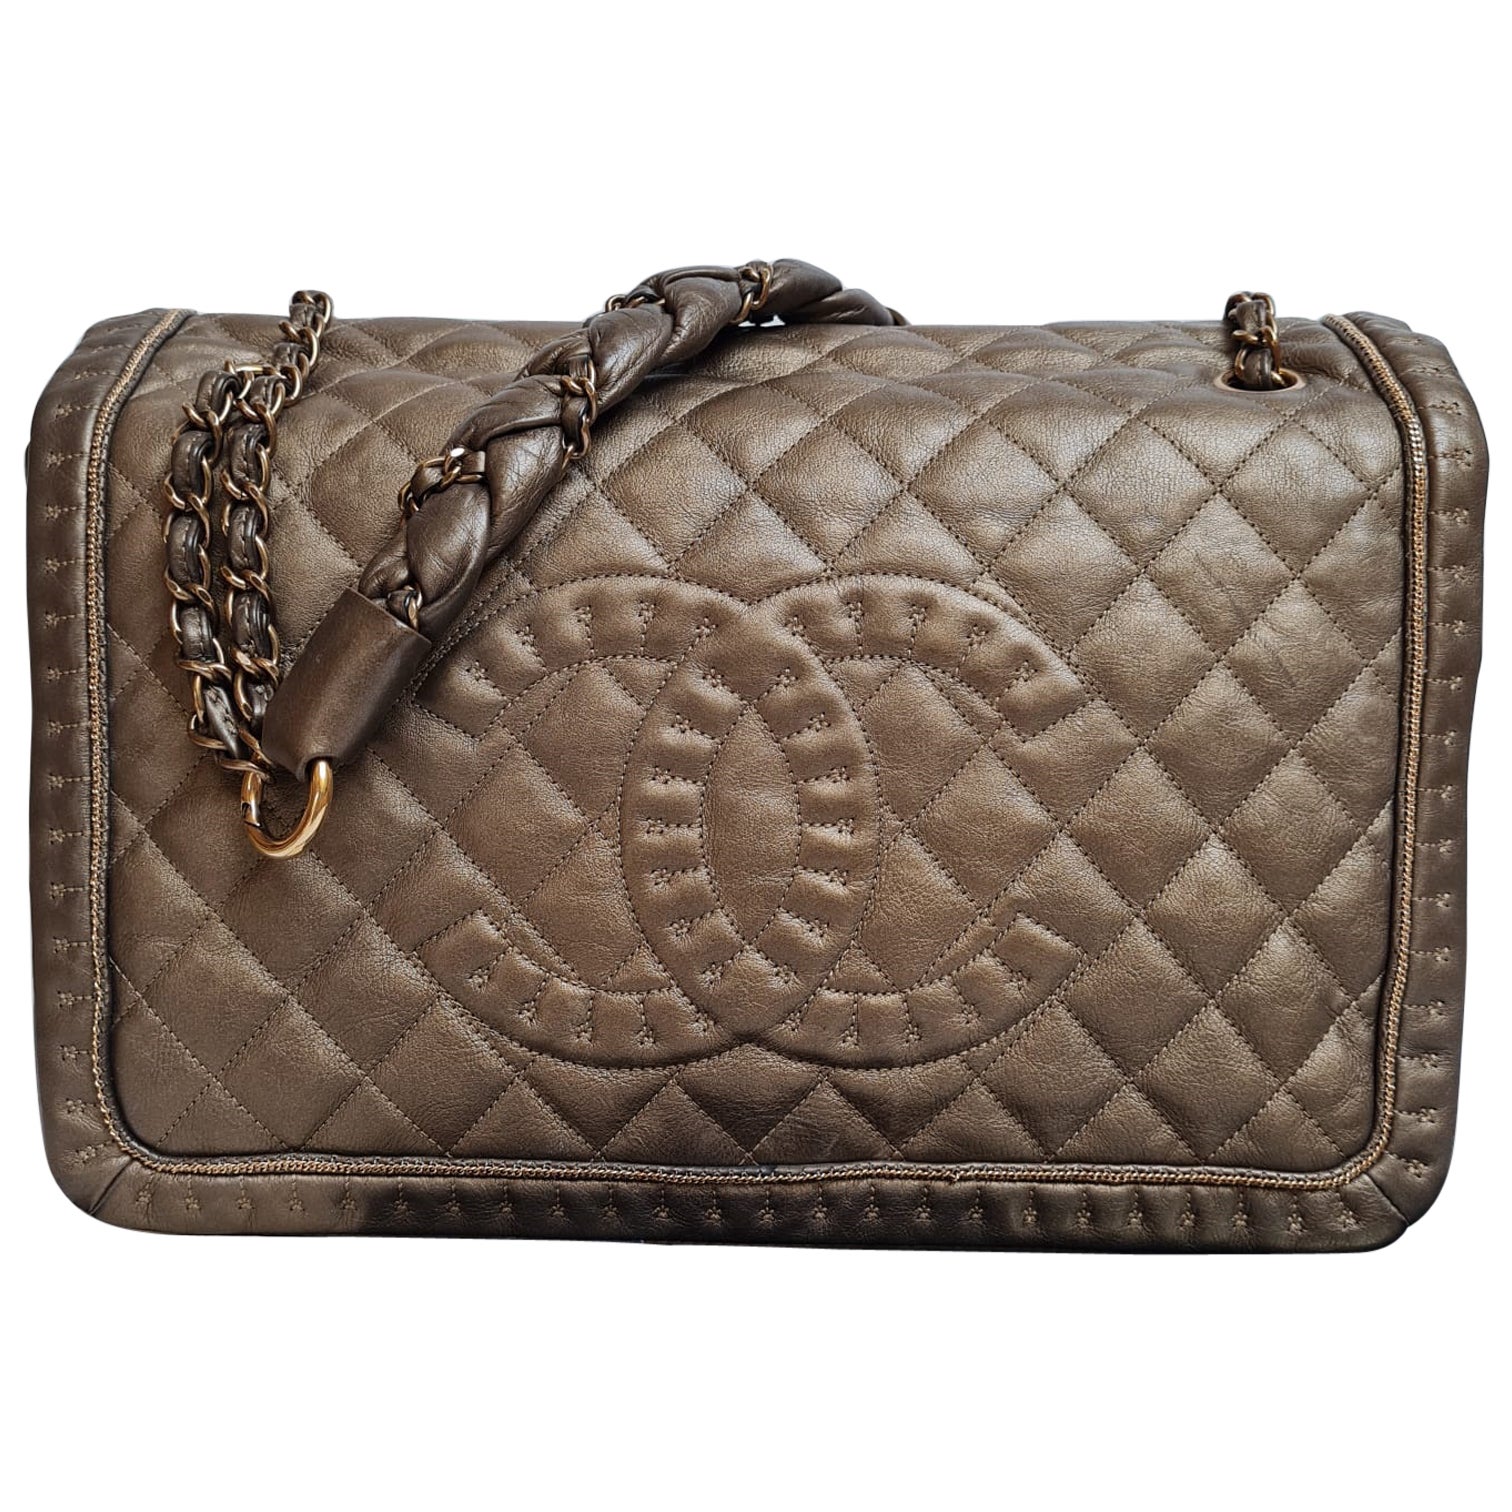 CC Vintage - Vintage Chanel Classic Jumbo Flap bag $19800